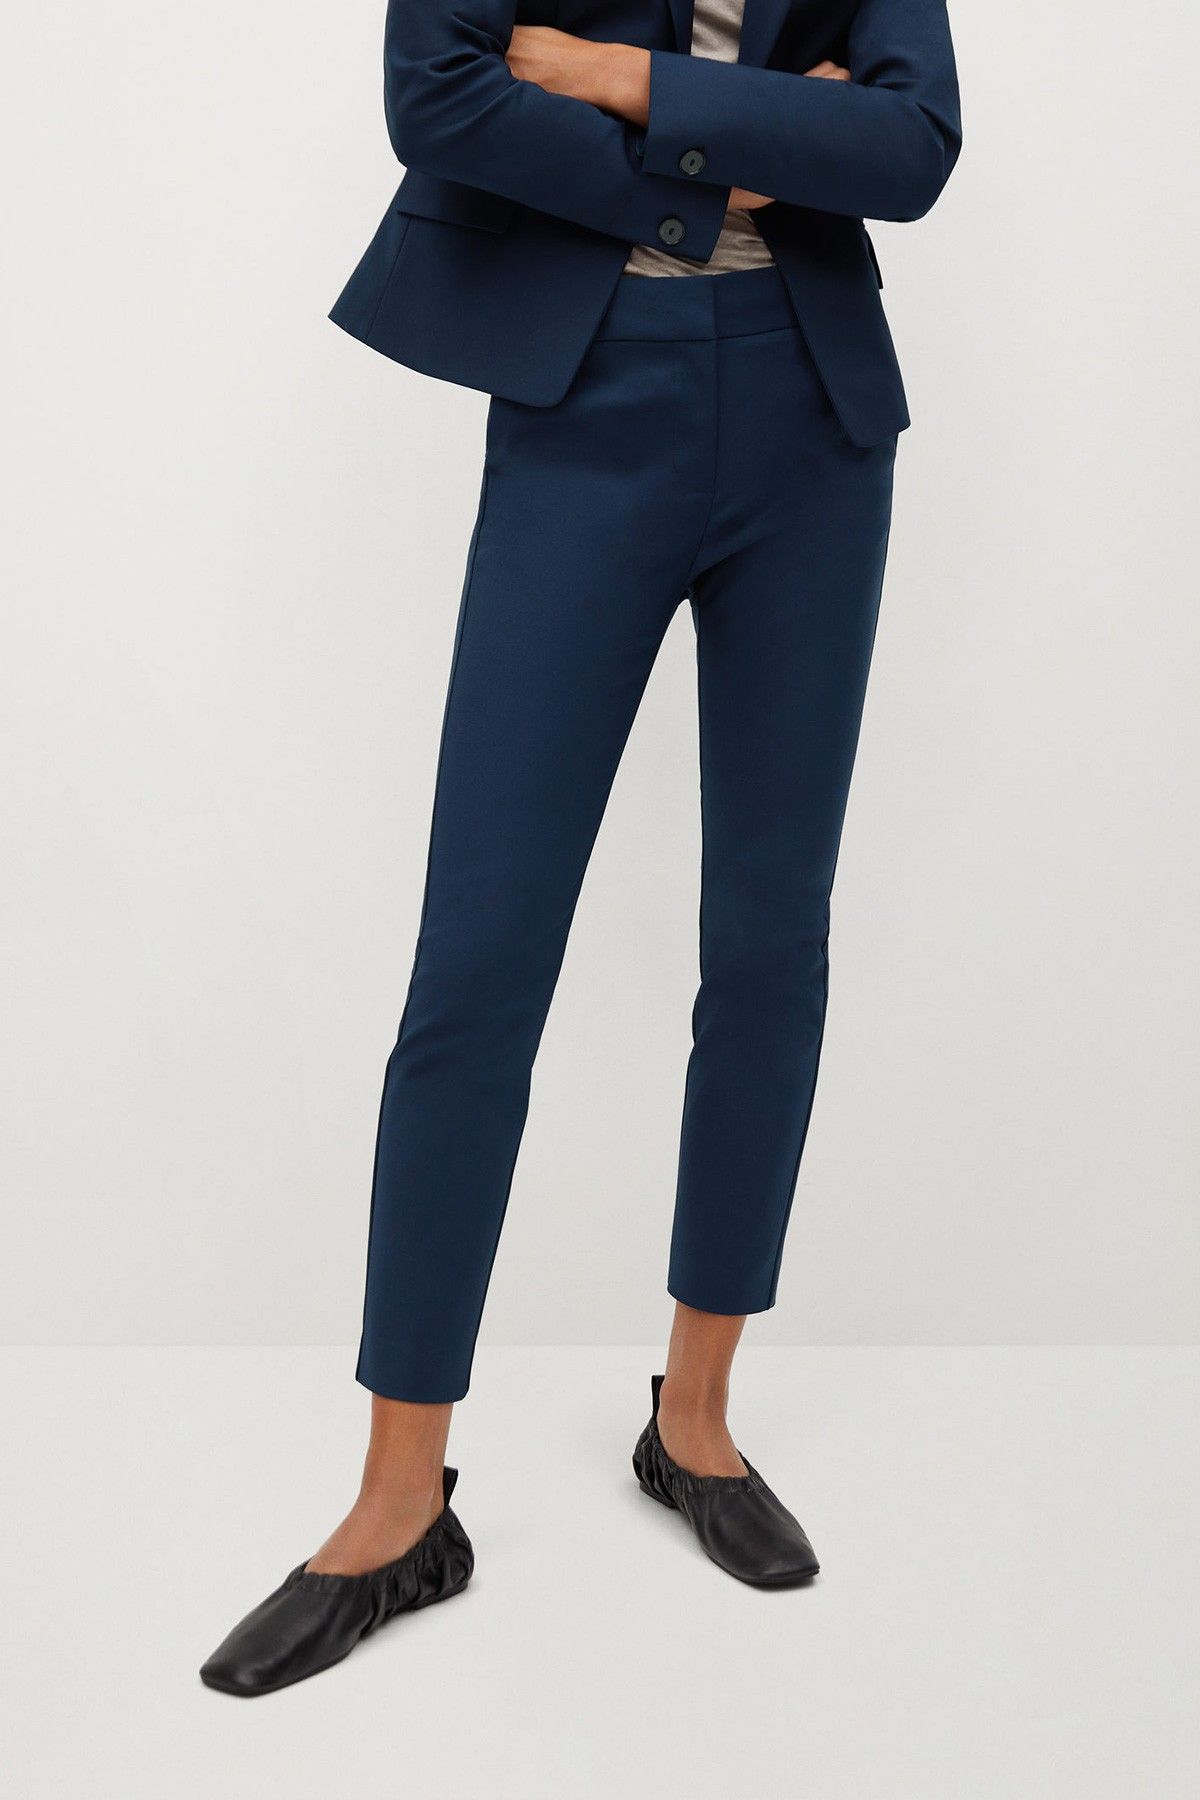 Navy Blue Velvet Pant Suit with peak lapels | Sumissura